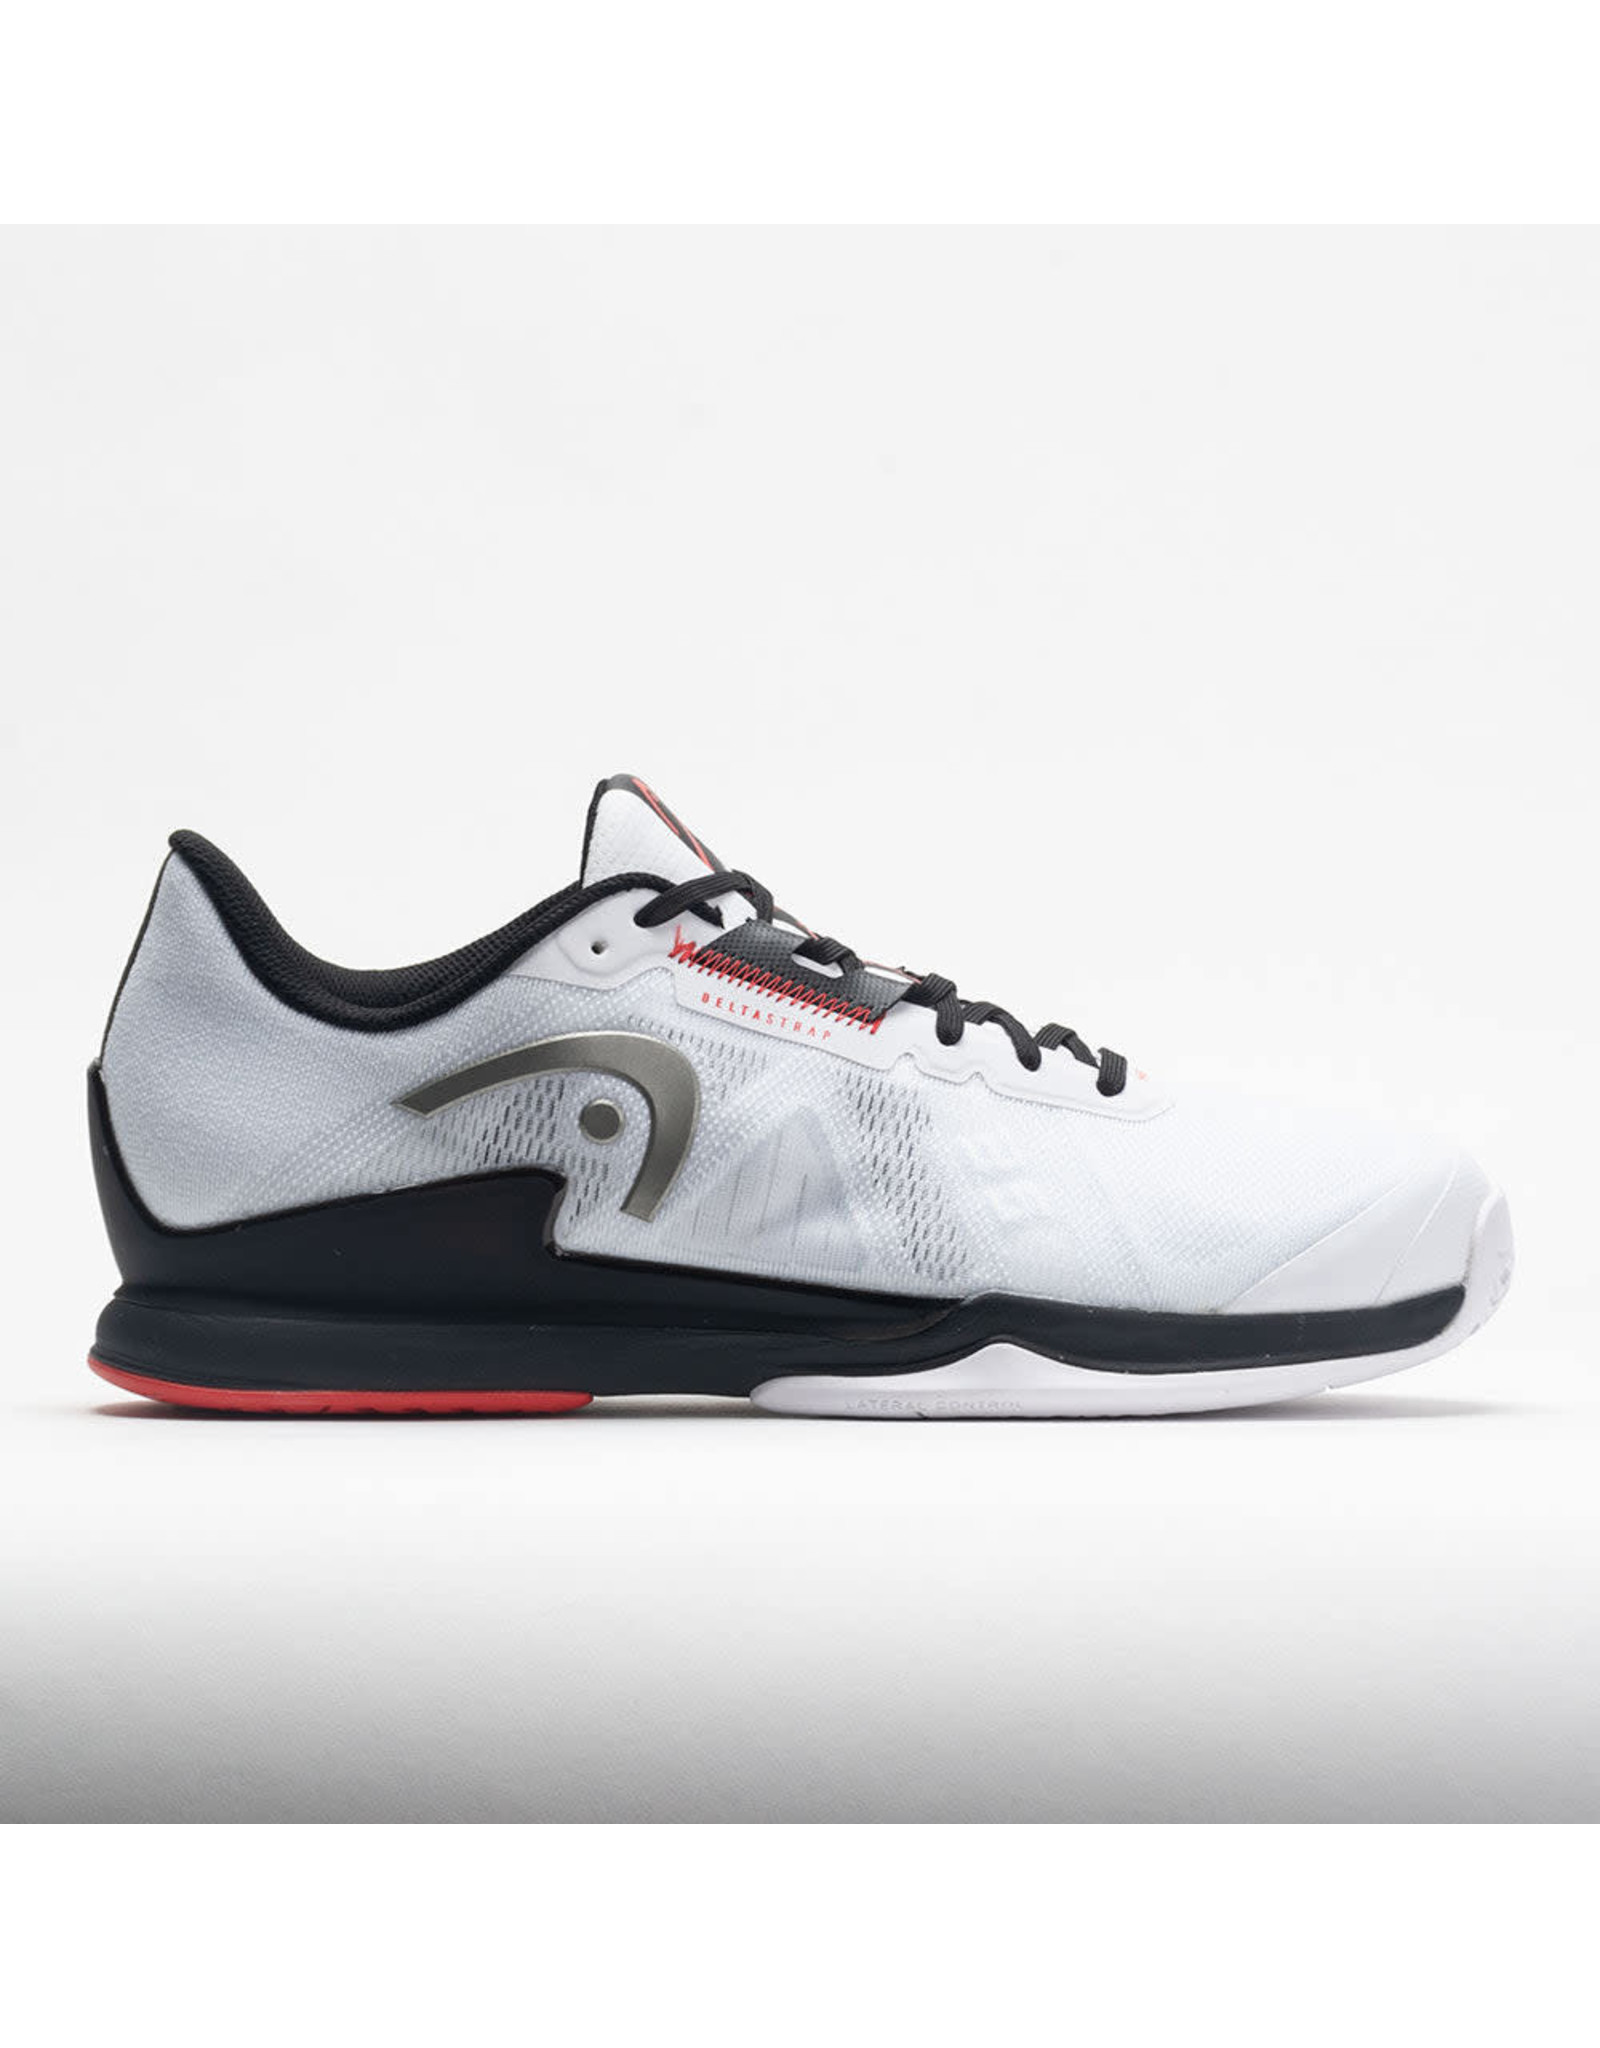 Head Head Sprint Pro 3.5 (White/Black) Men's Tennis Shoe